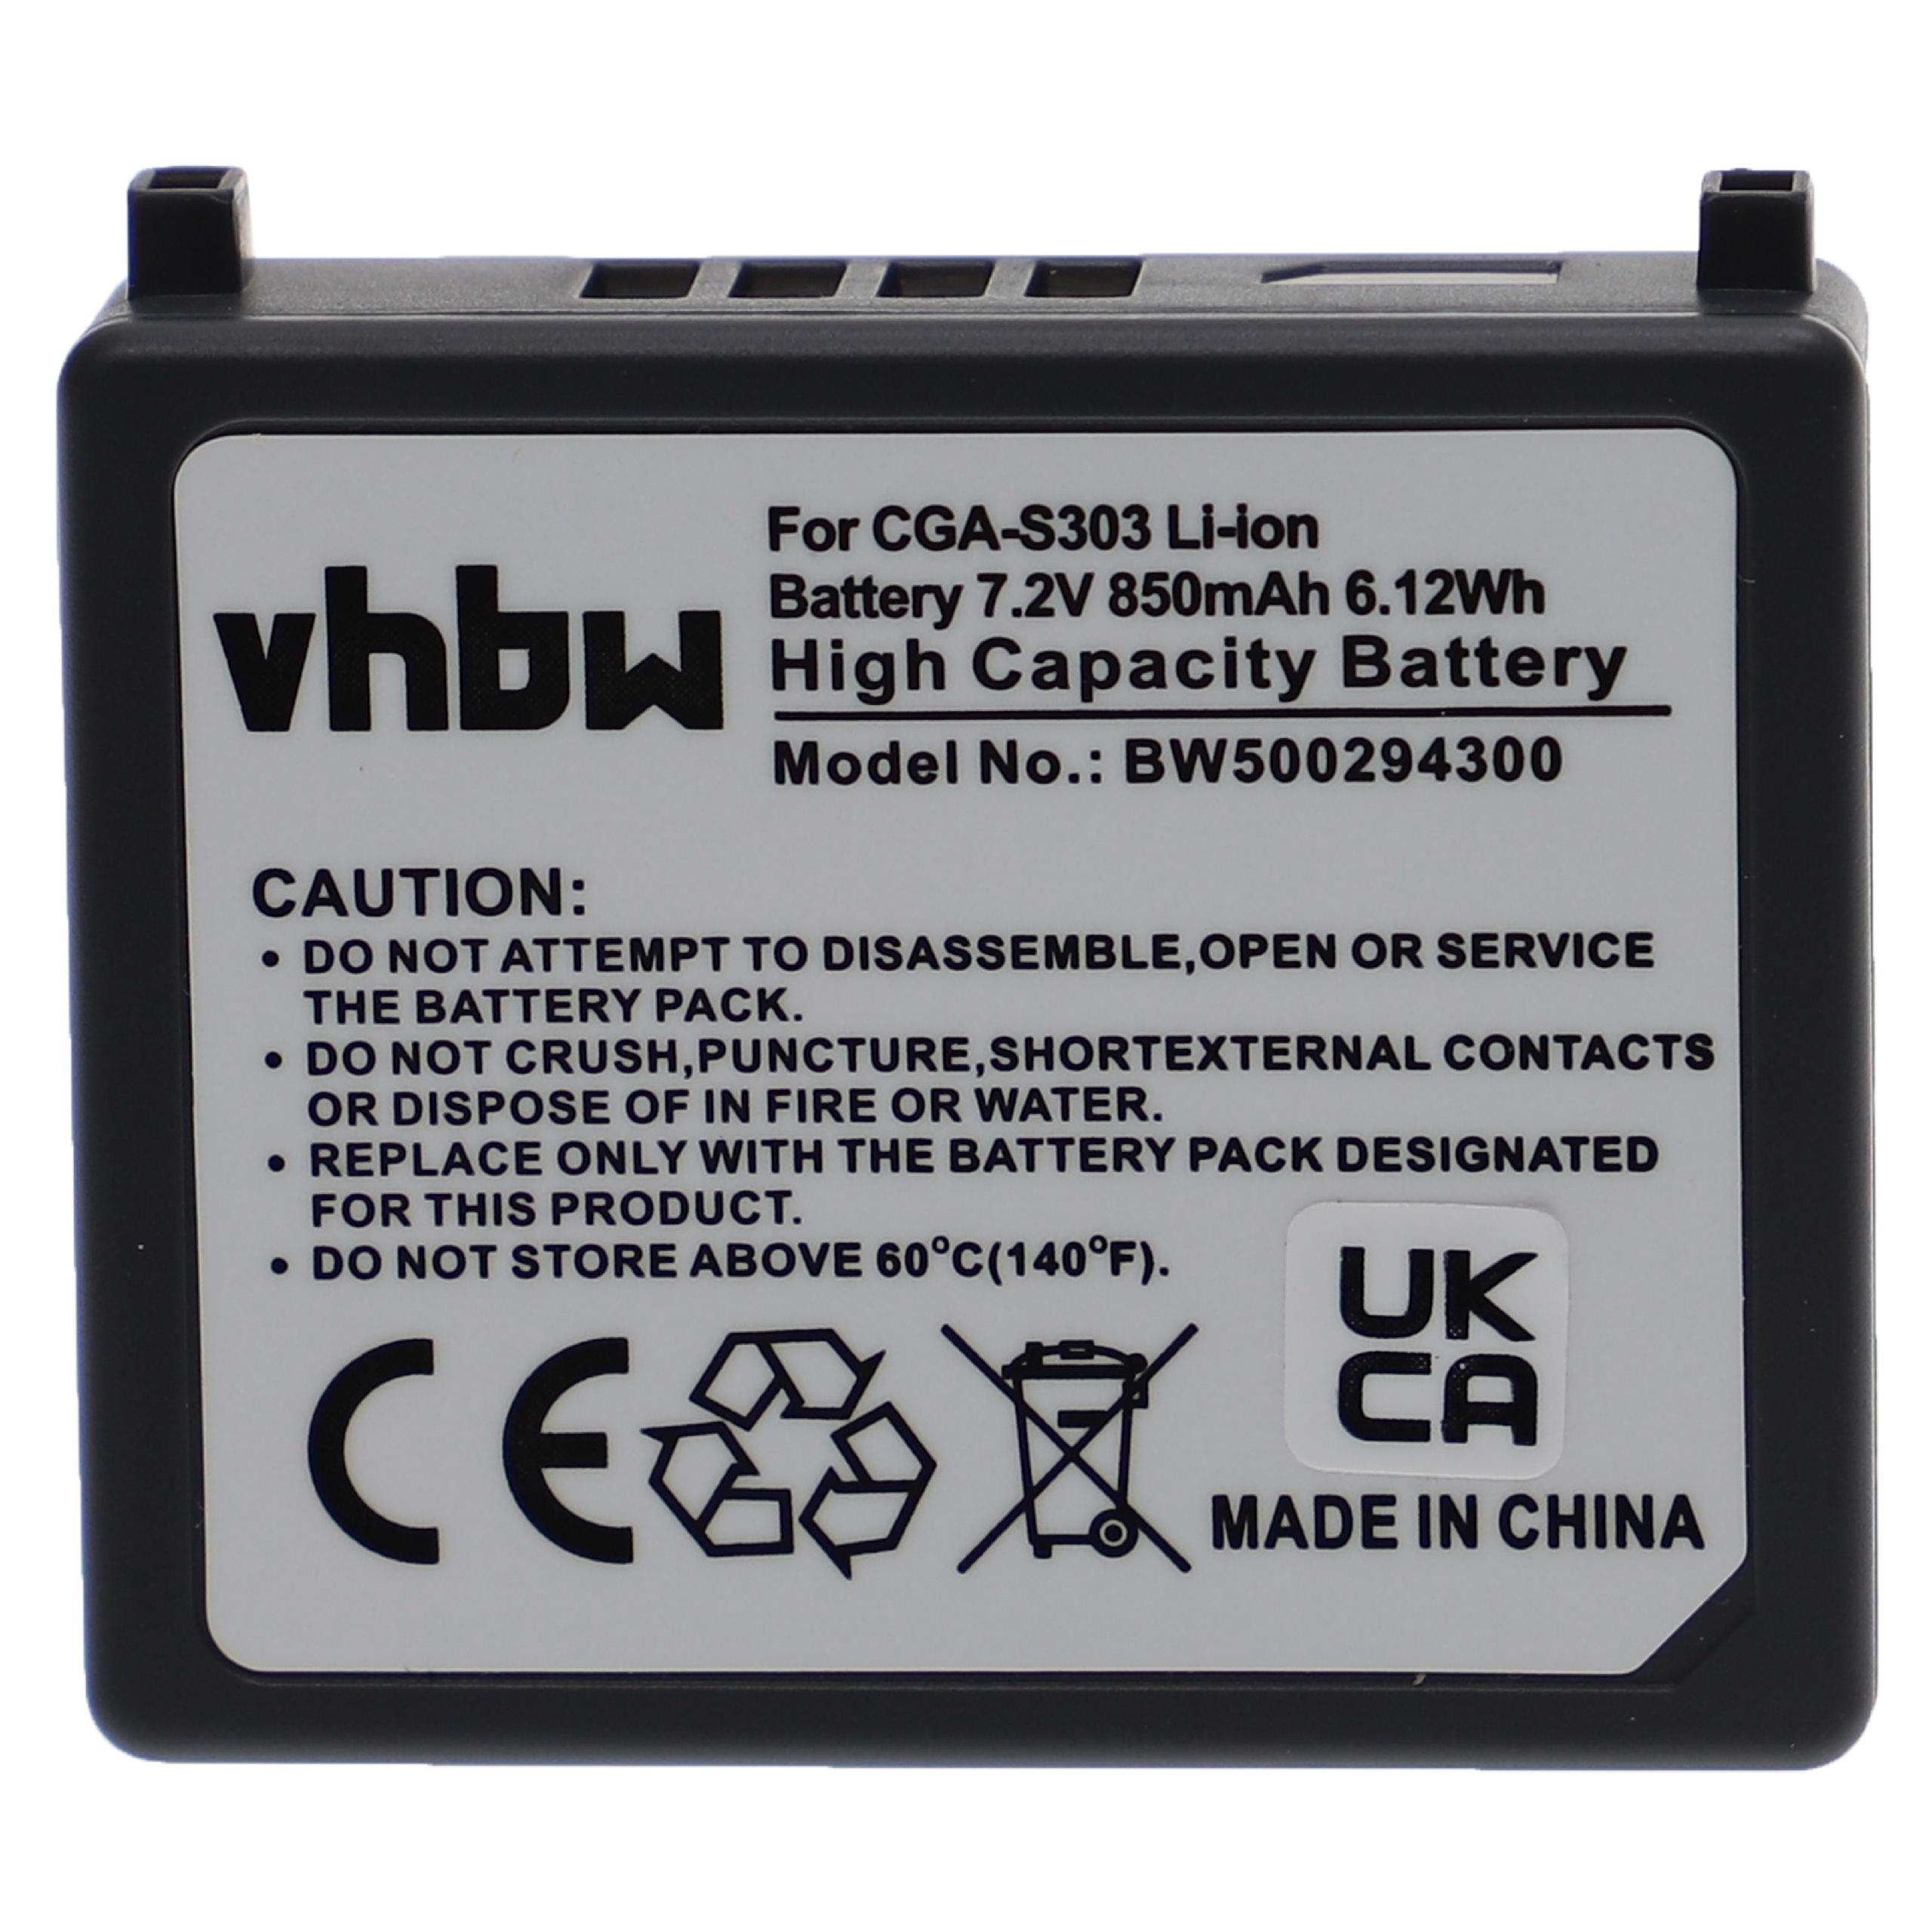 Videocamera Battery Replacement for Panasonic CGA-S303, CGA-S303E - 500mAh 7.2V Li-Ion